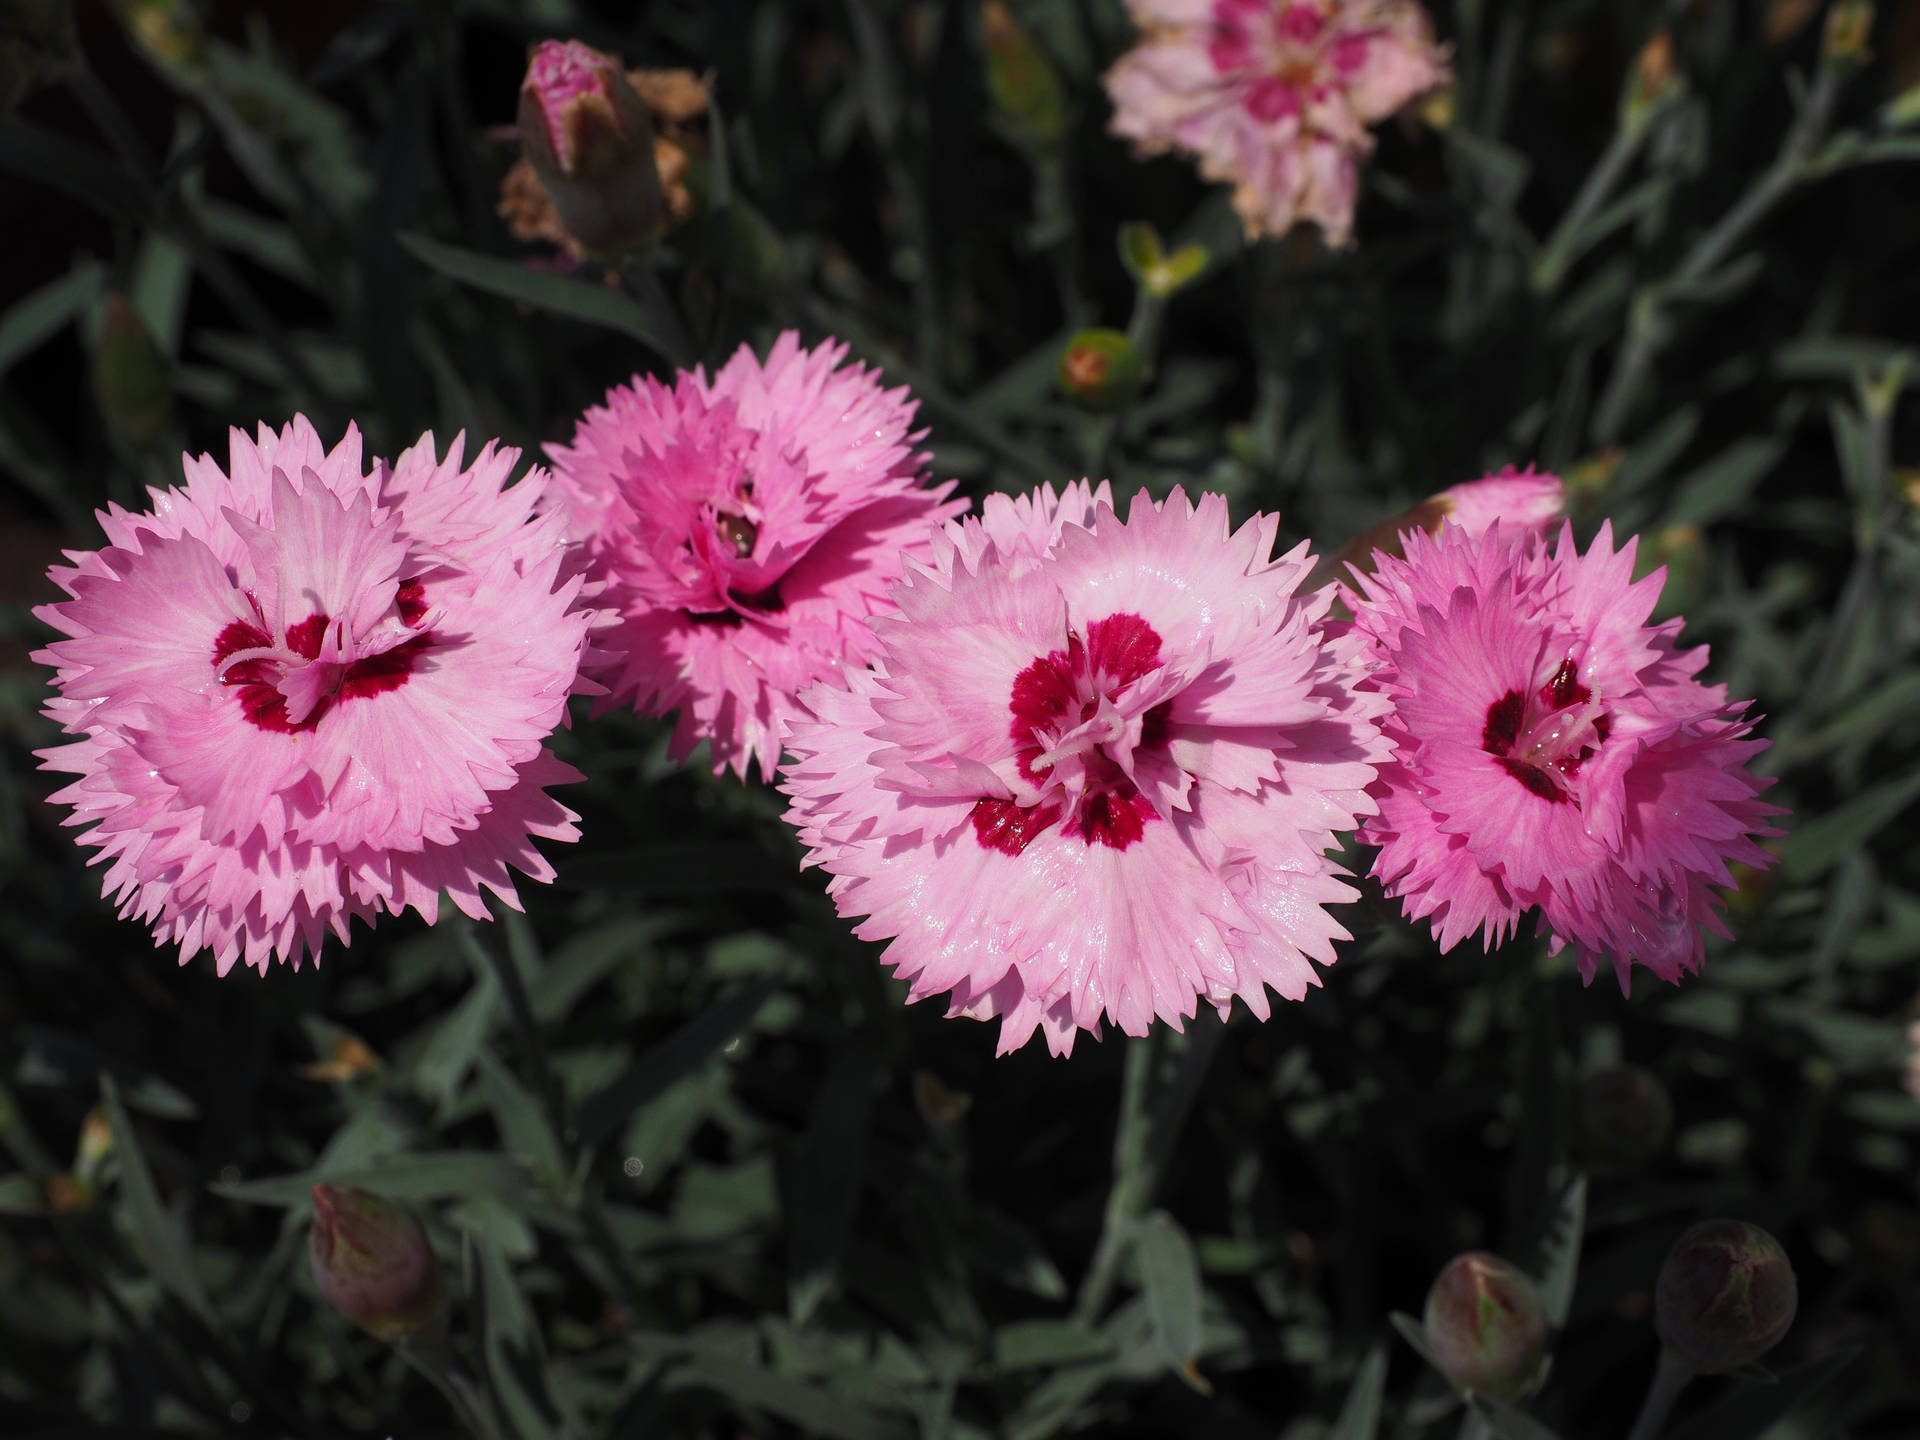 Mesmerizing Pink Carnation In Full Bloom